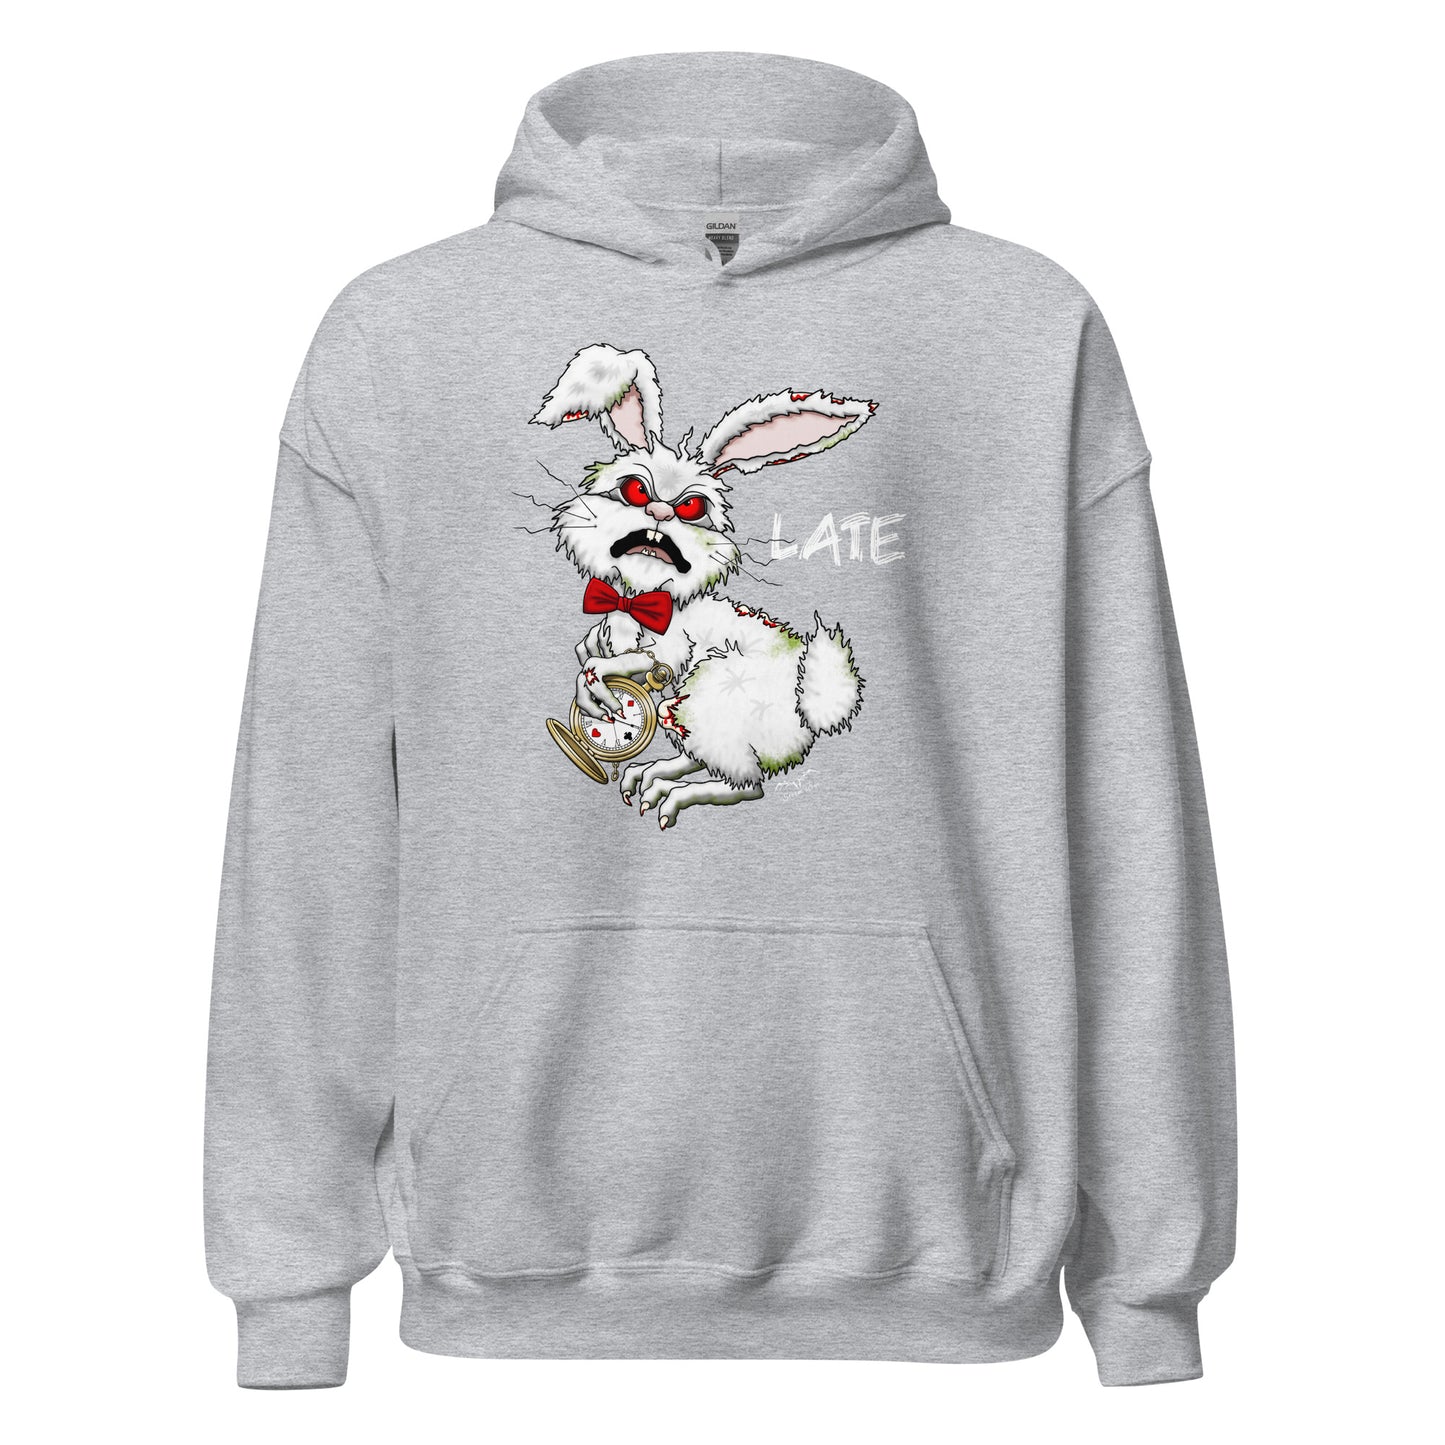 stormseye design zombie white rabbit hoodie flat view sports grey